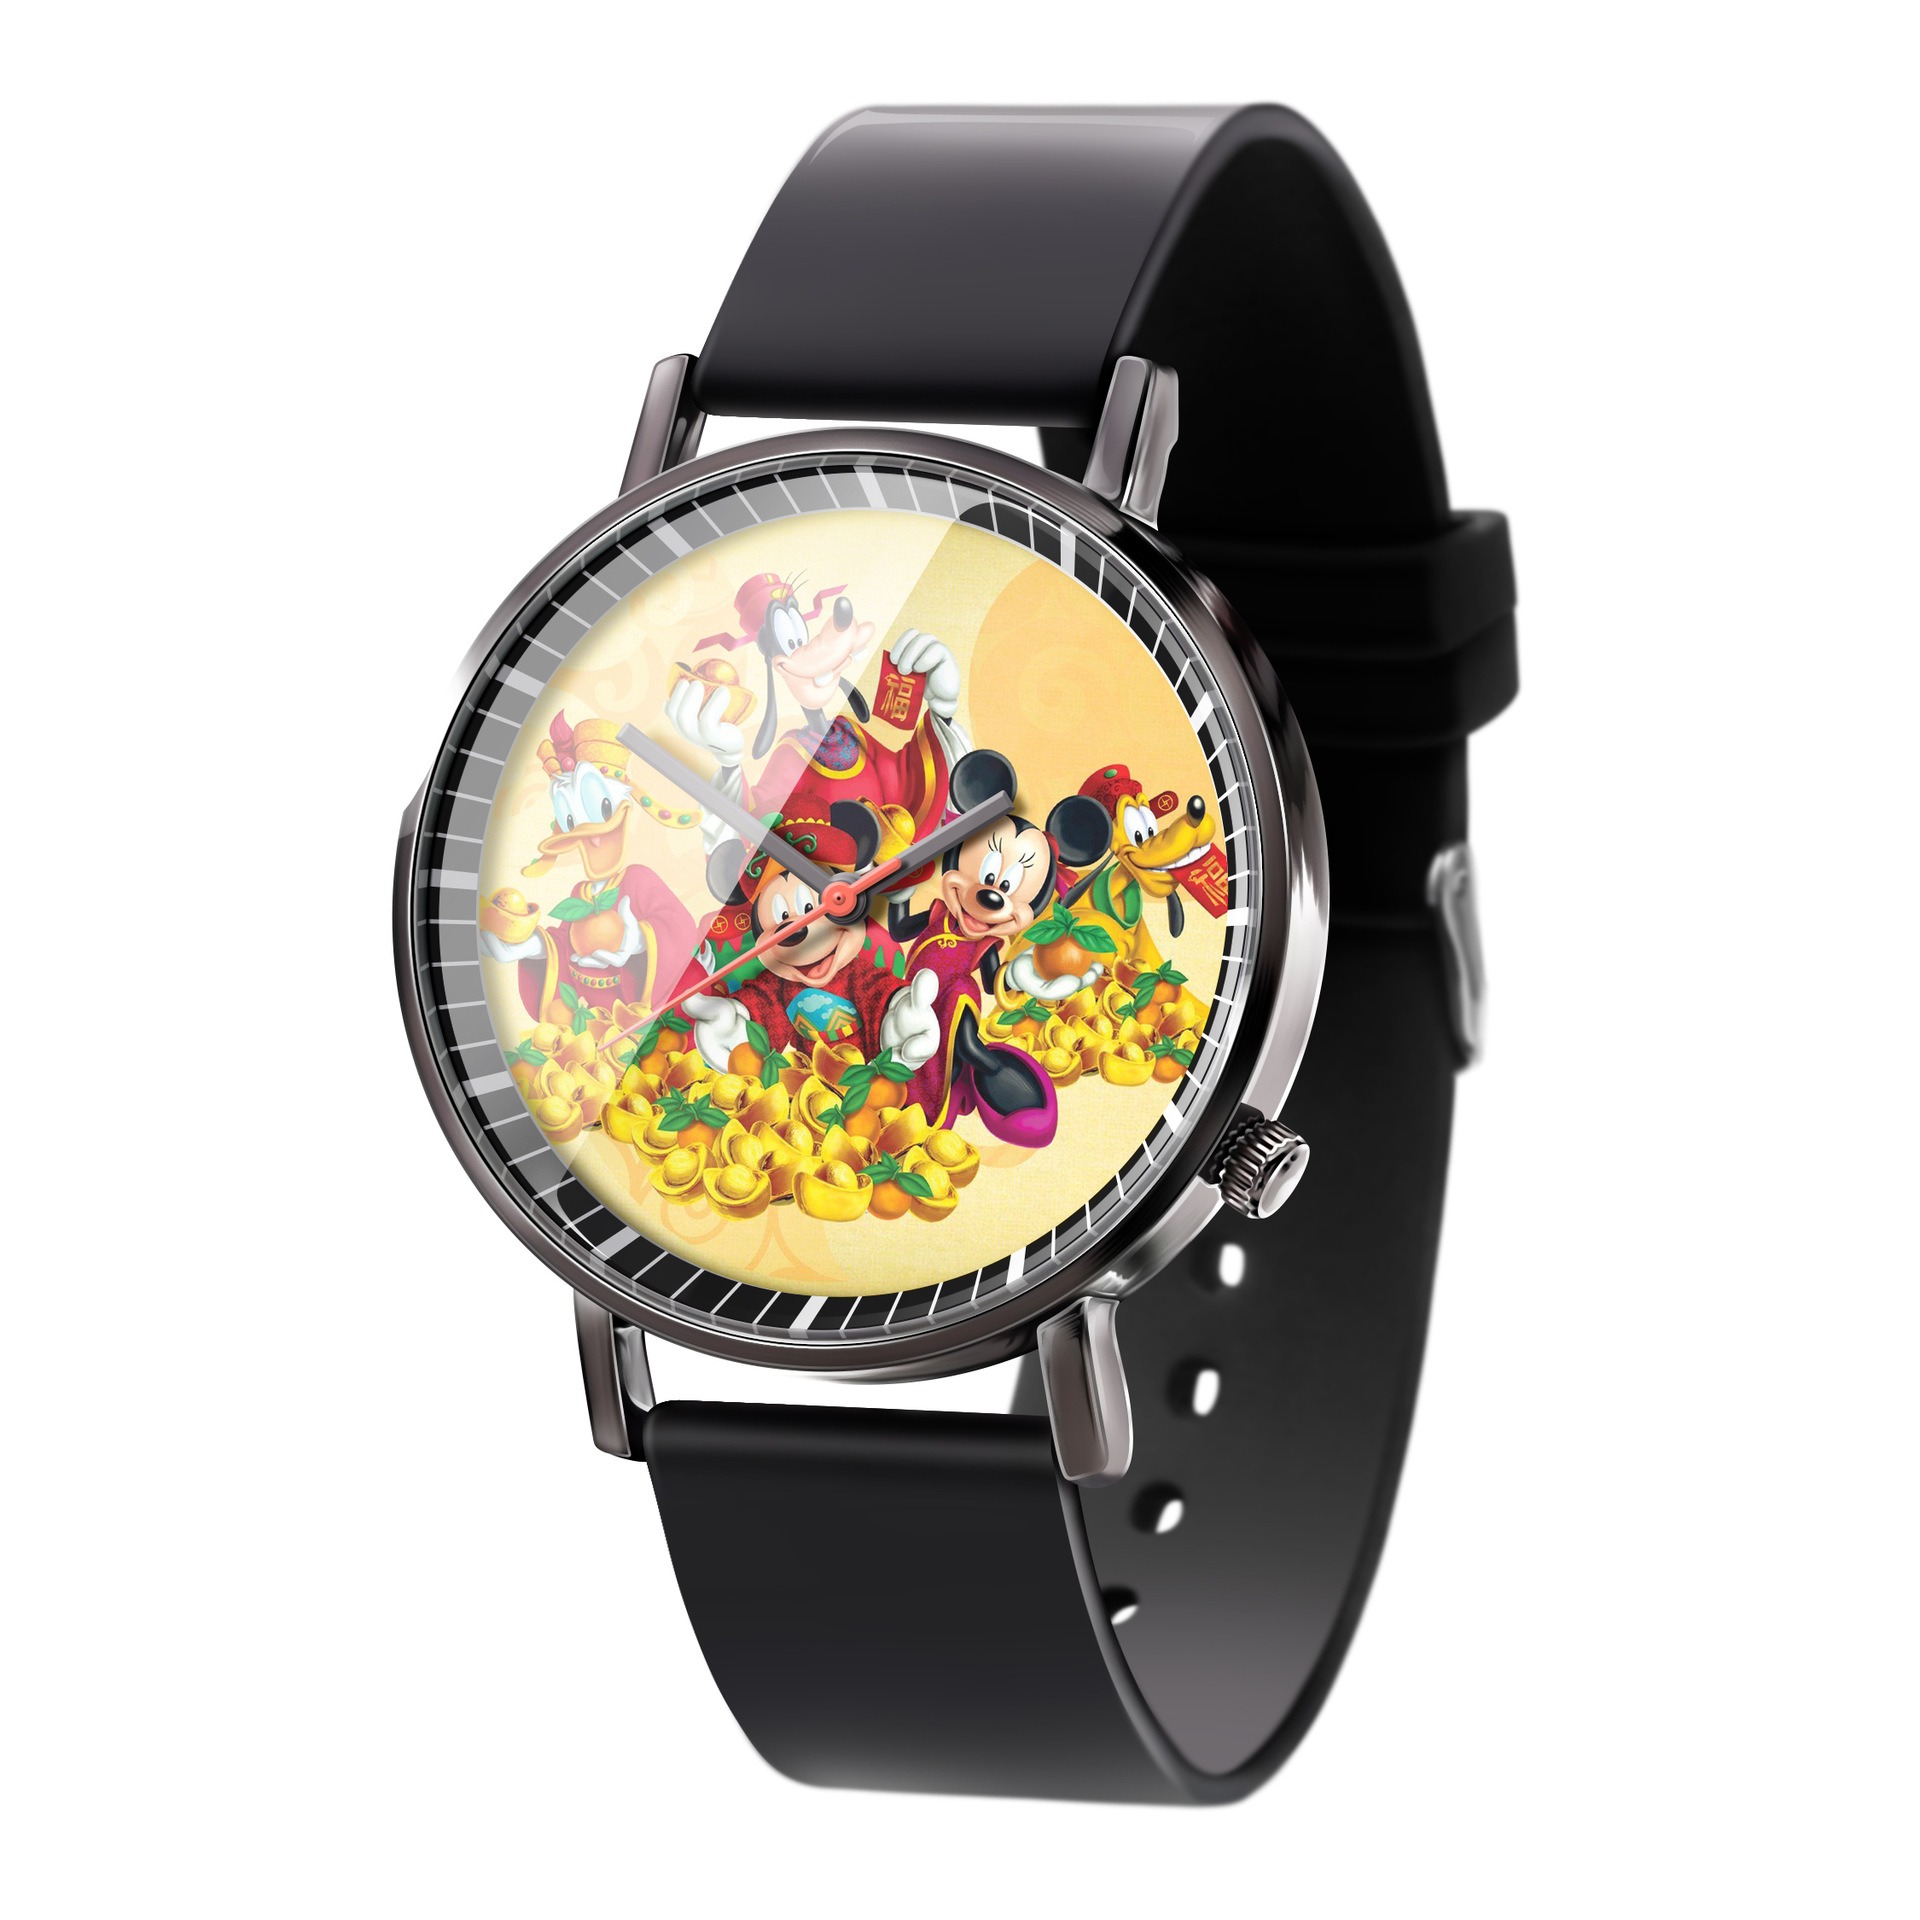 Disney anime quartz watch